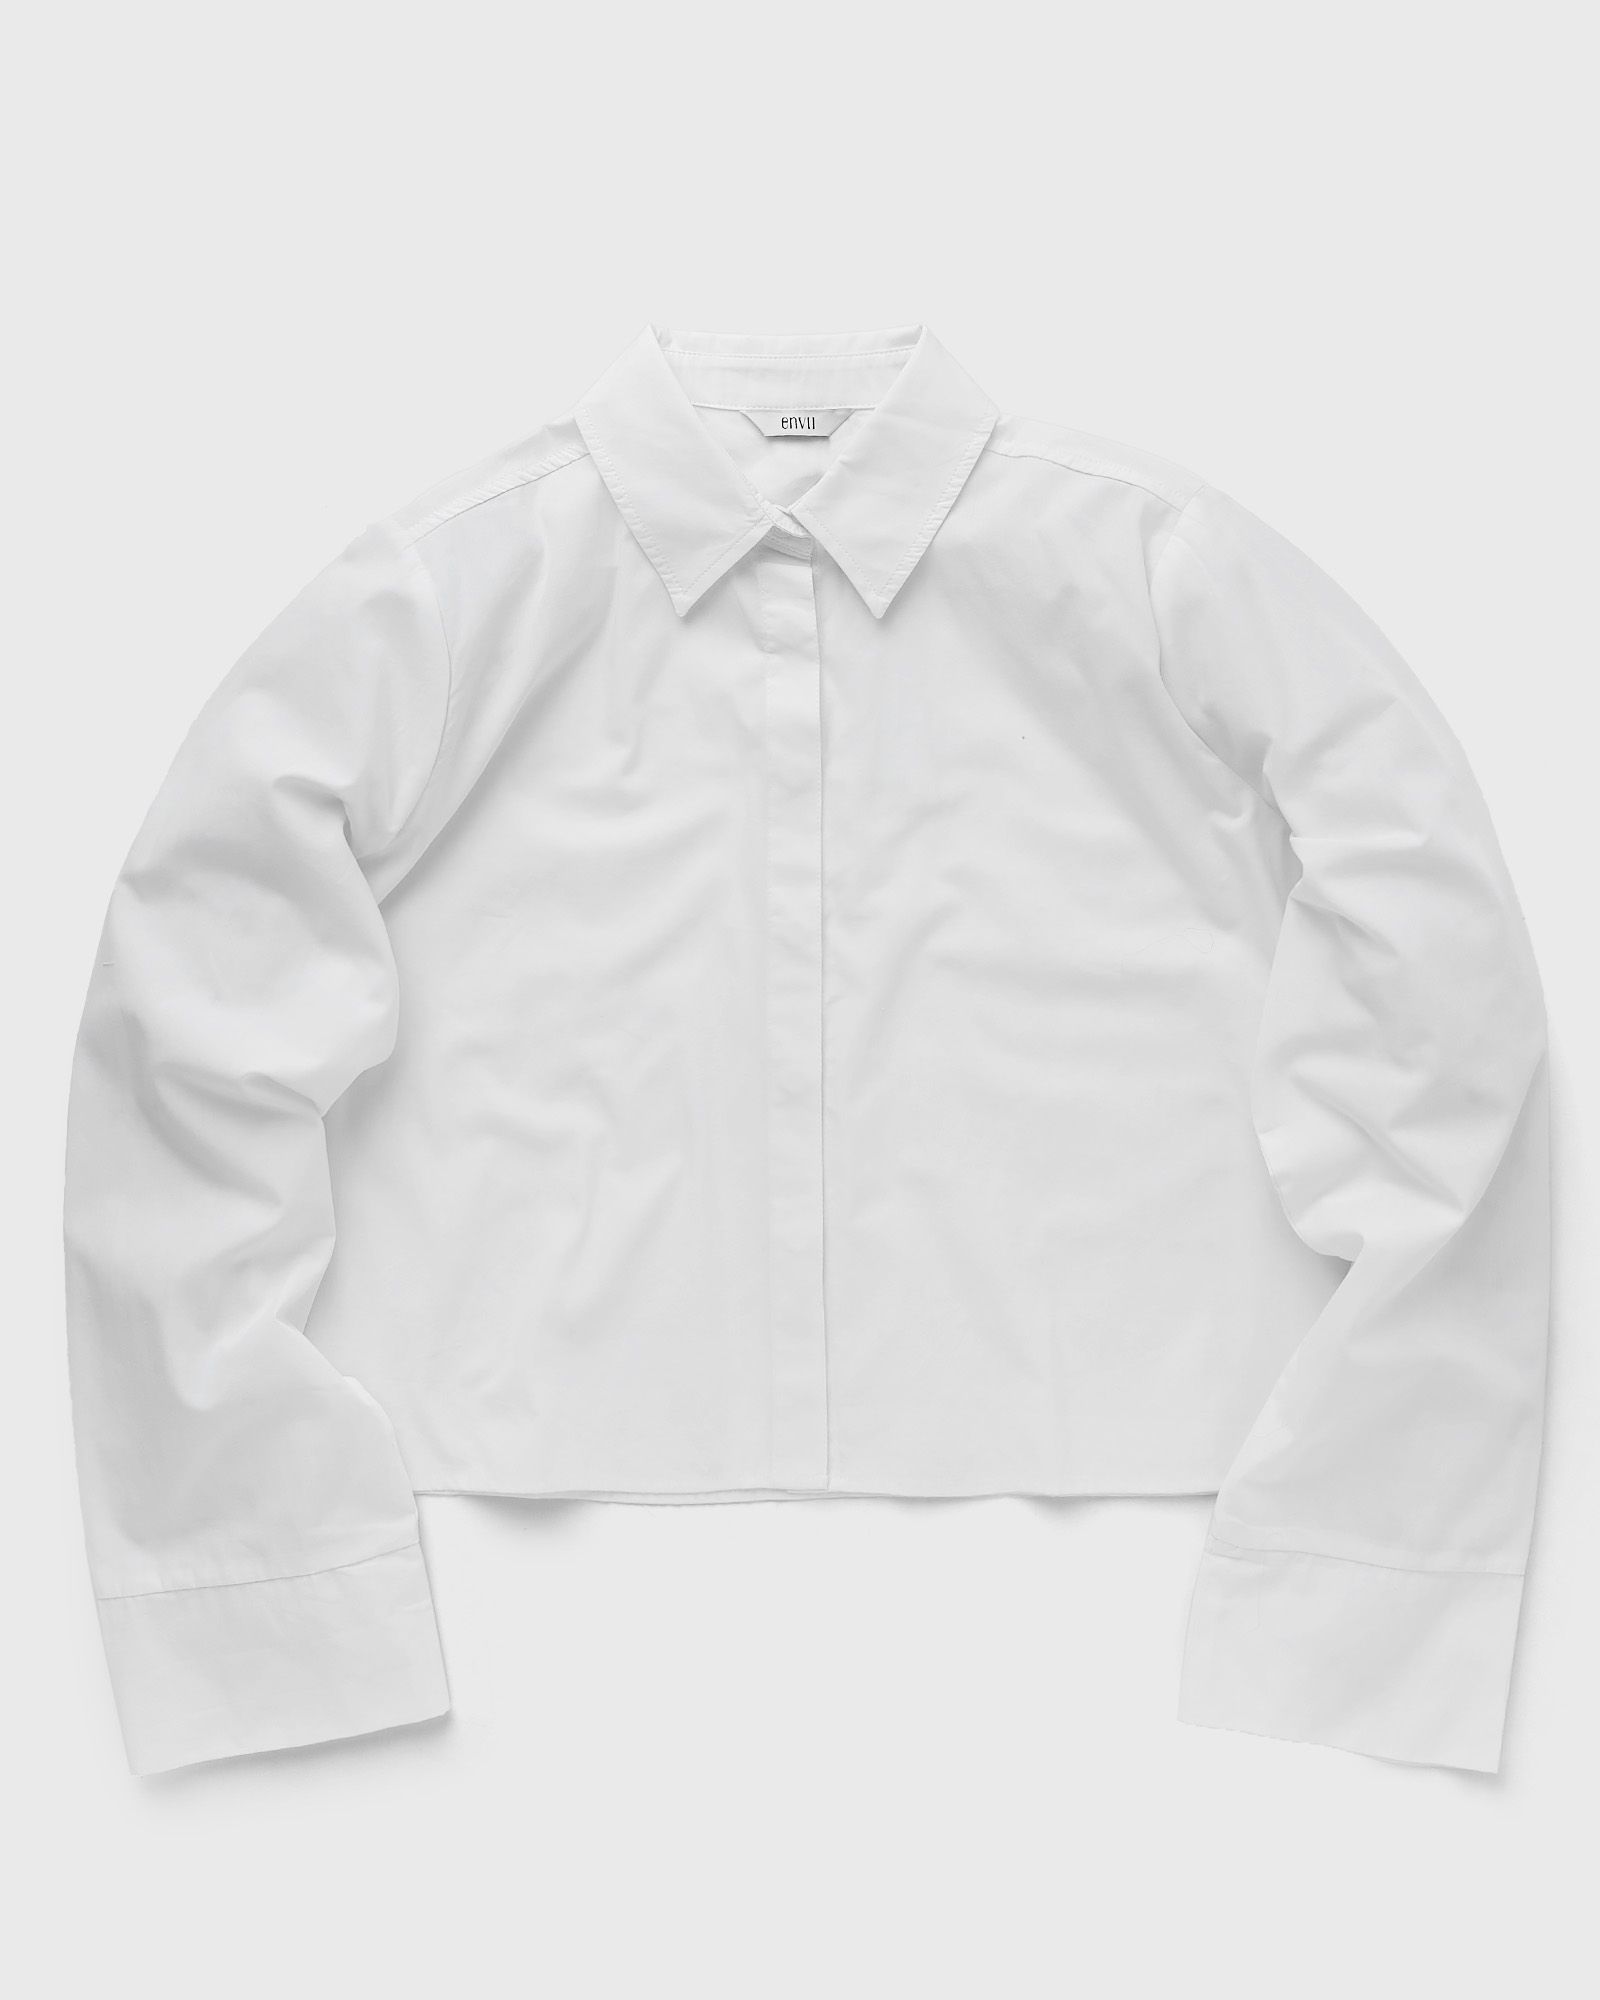 Envii - entapeti ls shirt 7005 women shirts & blouses white in größe:m